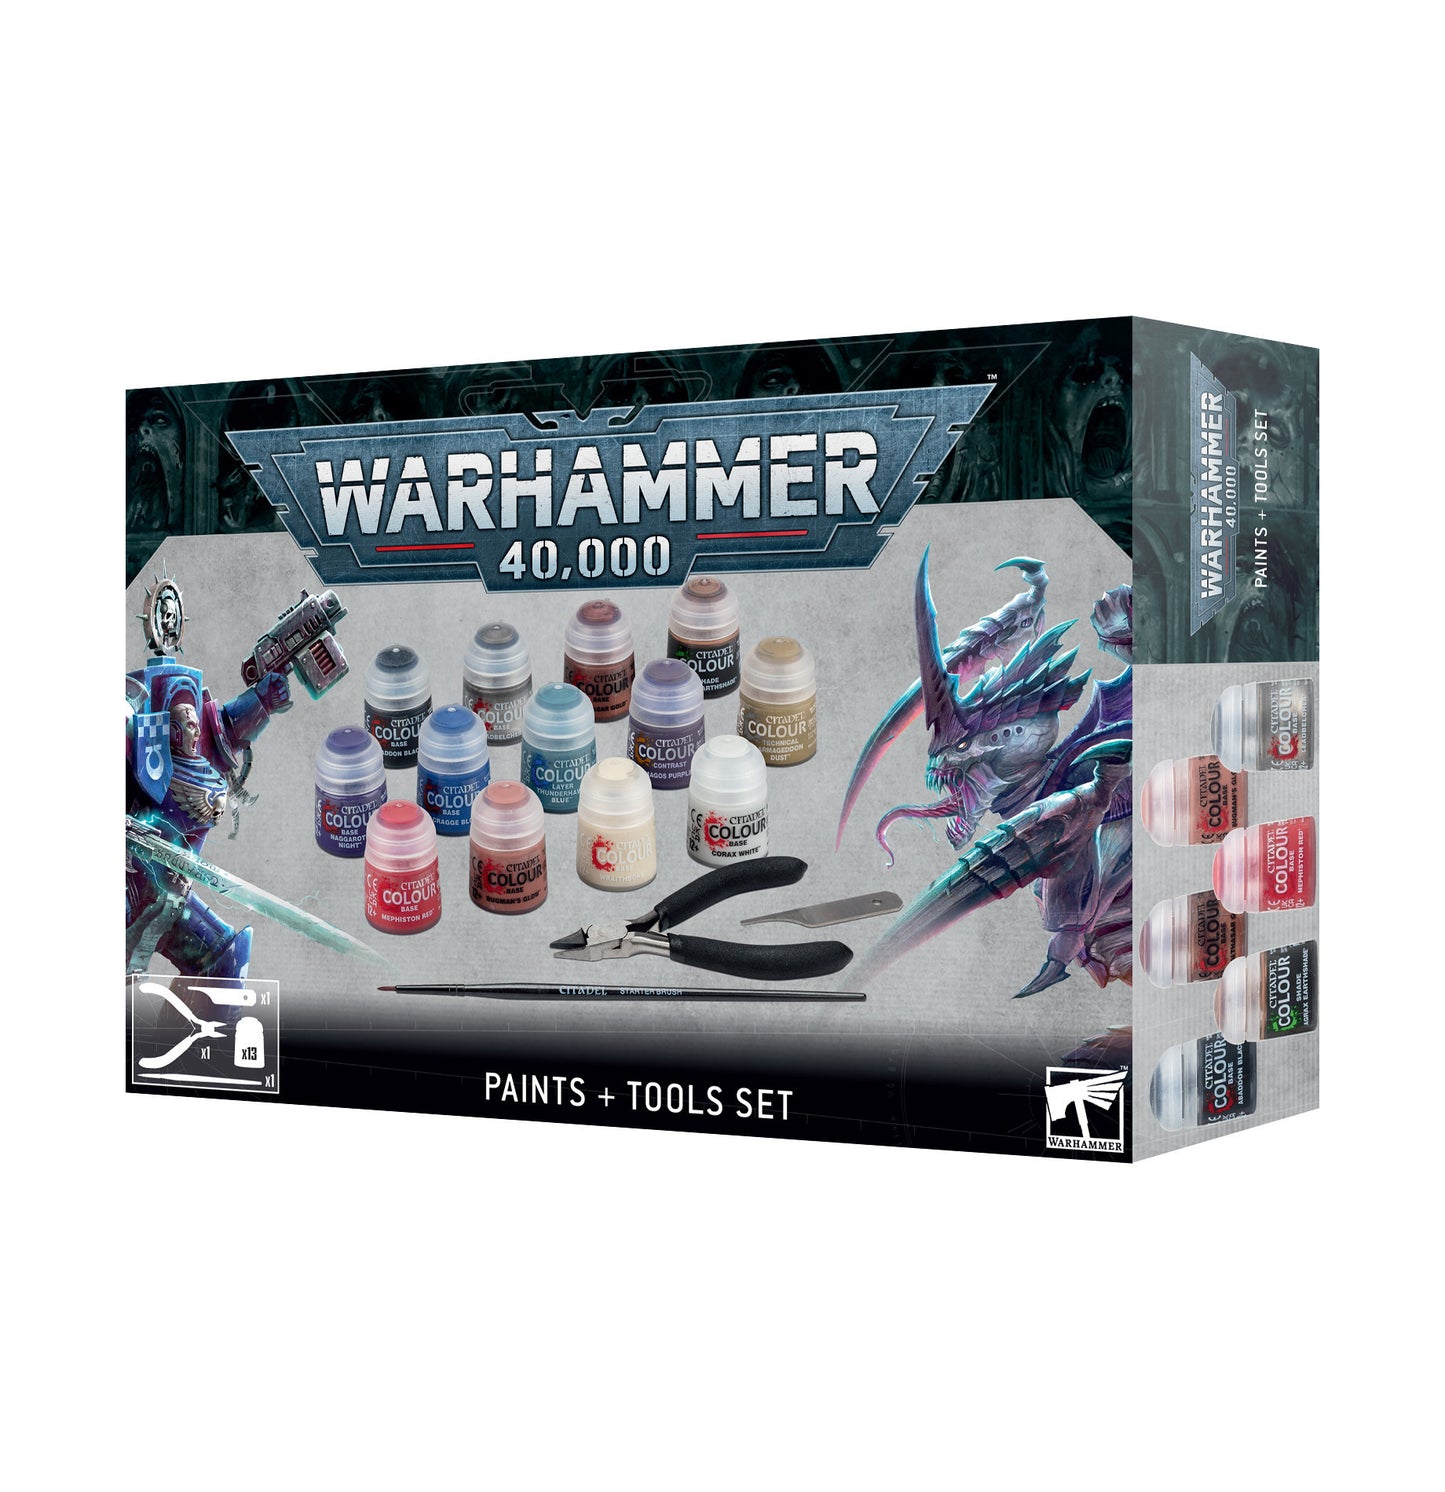 New Warhammer 40K Paints + Tools Set